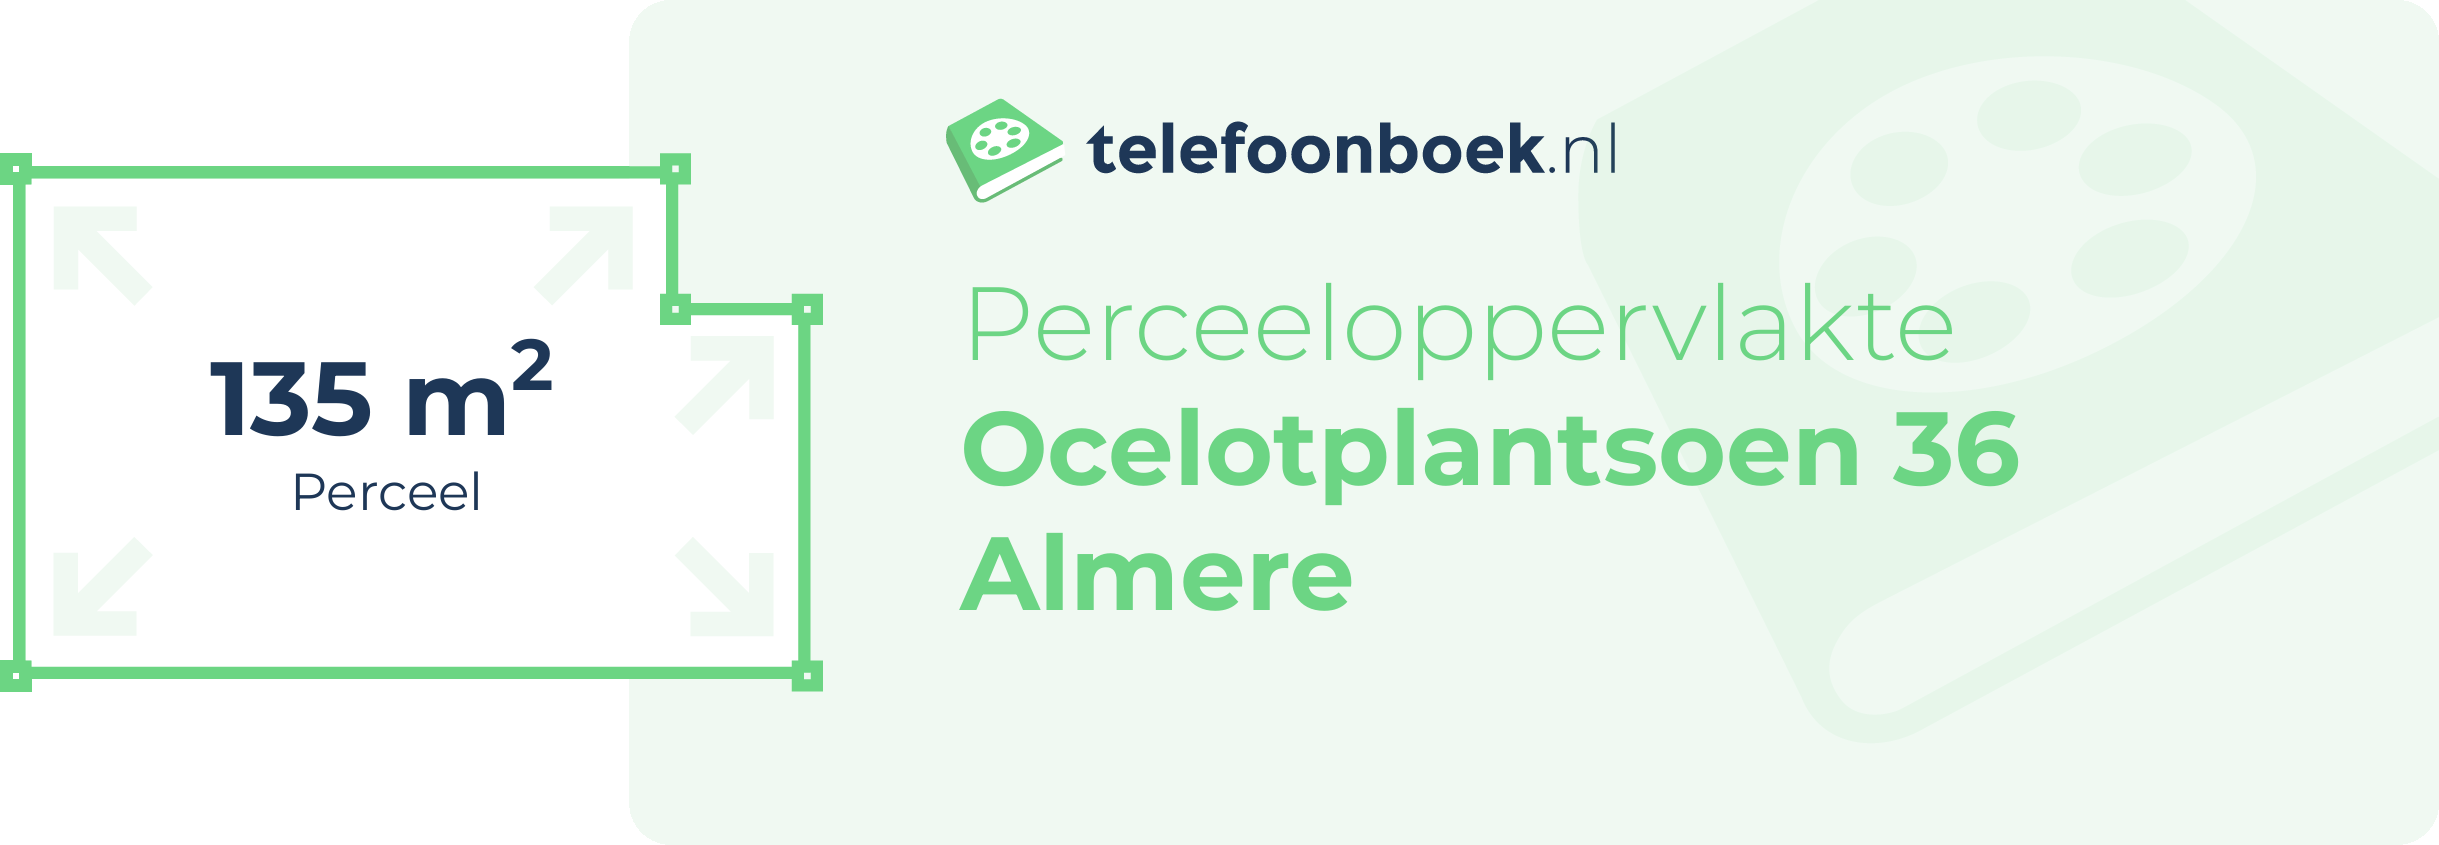 Perceeloppervlakte Ocelotplantsoen 36 Almere